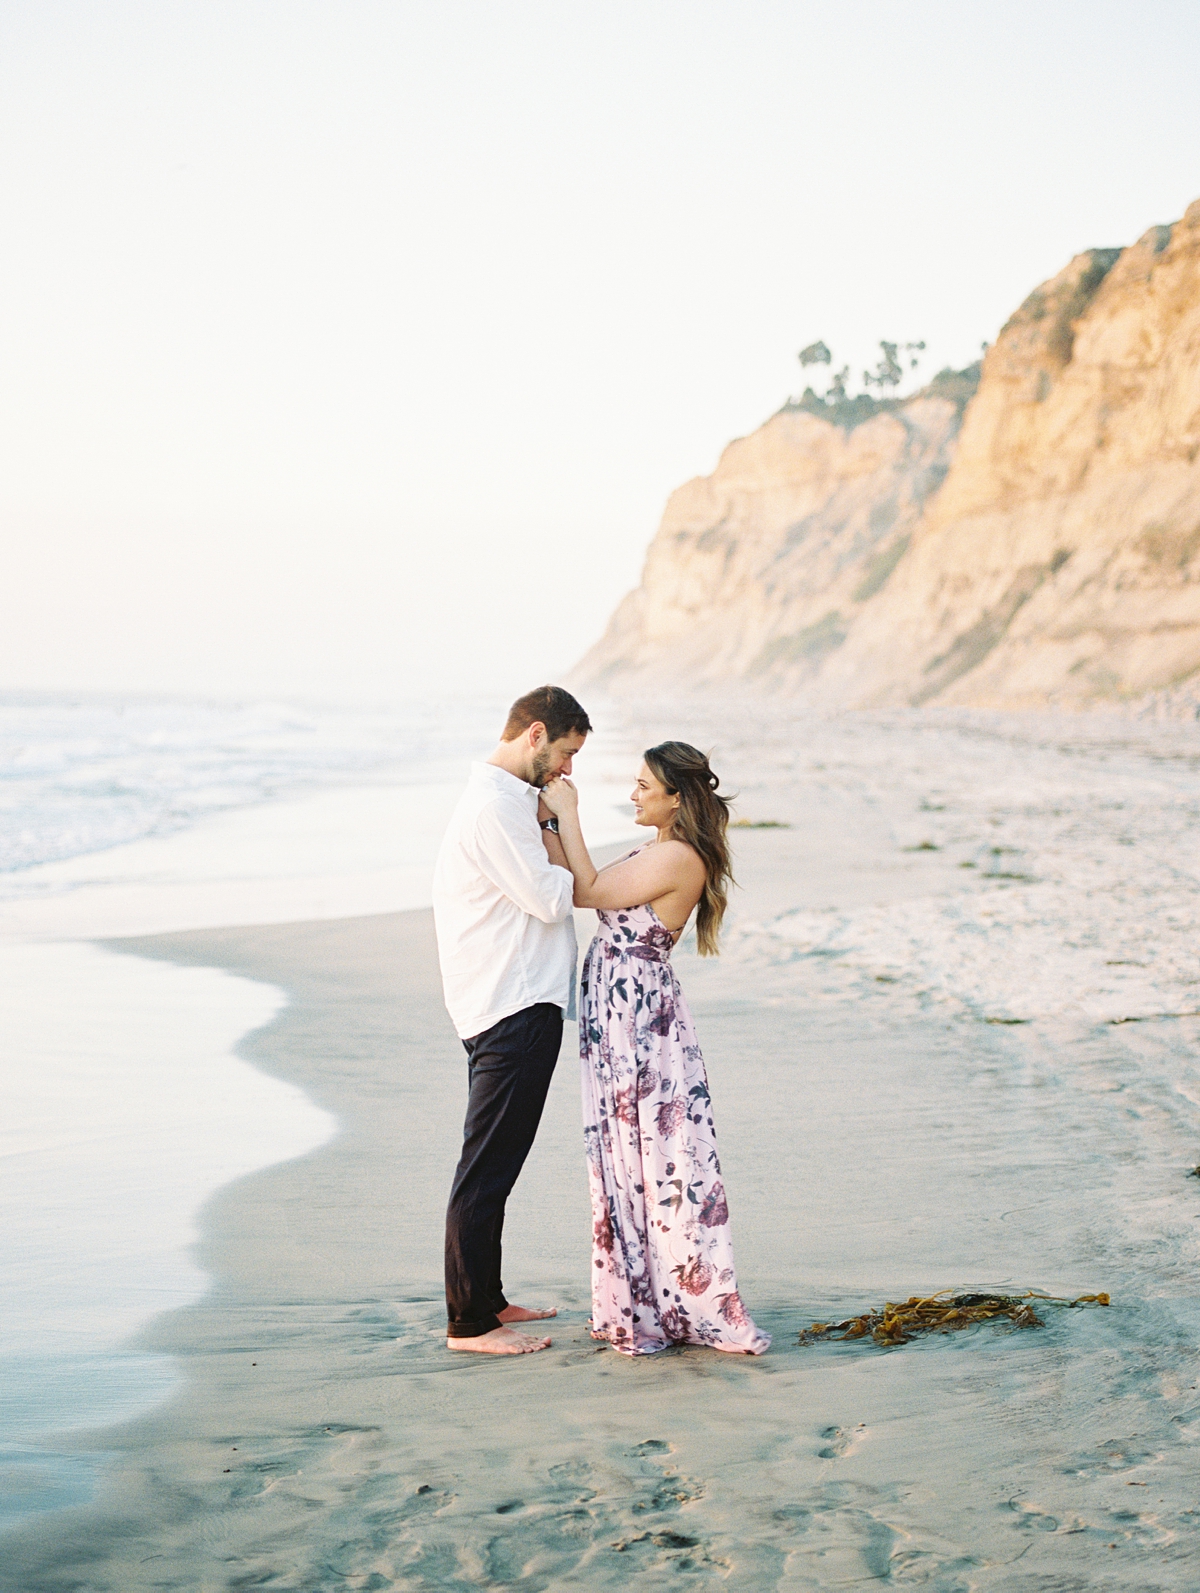 Blacks Beach engagement session - San Diego photographer Jade Maria Photography